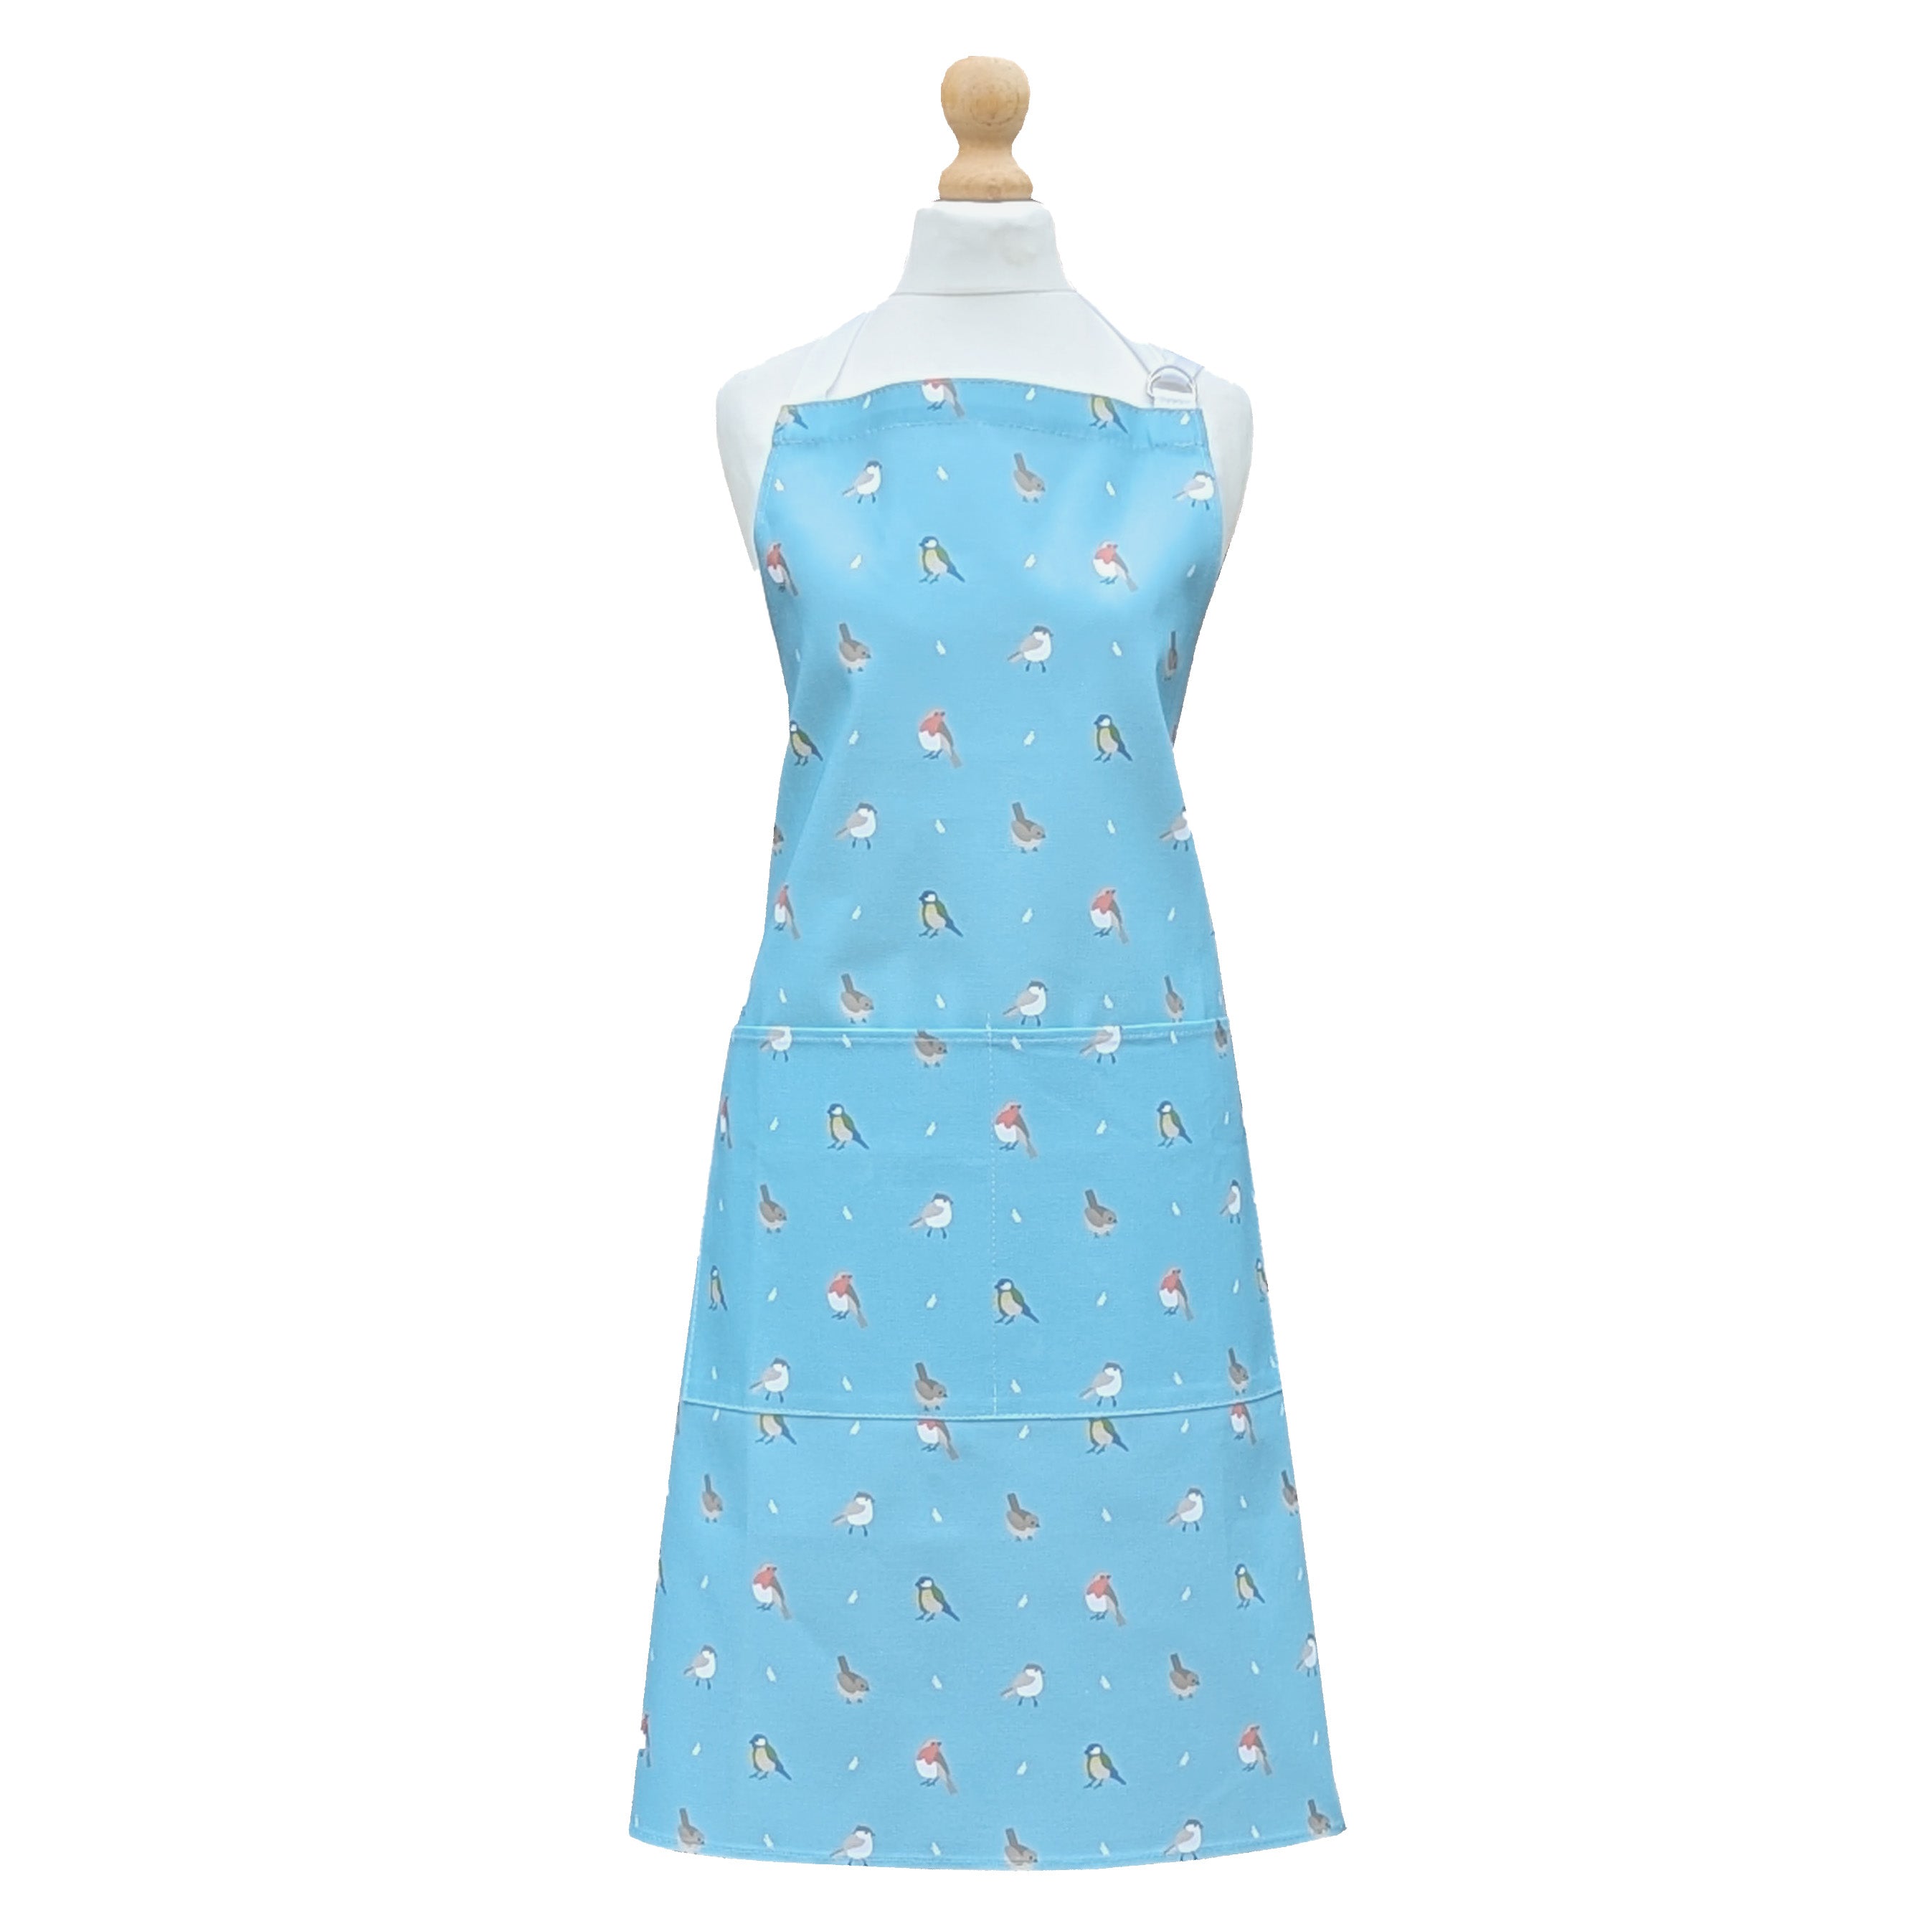 Teal cotton kitchen apron with garden bird illustrations